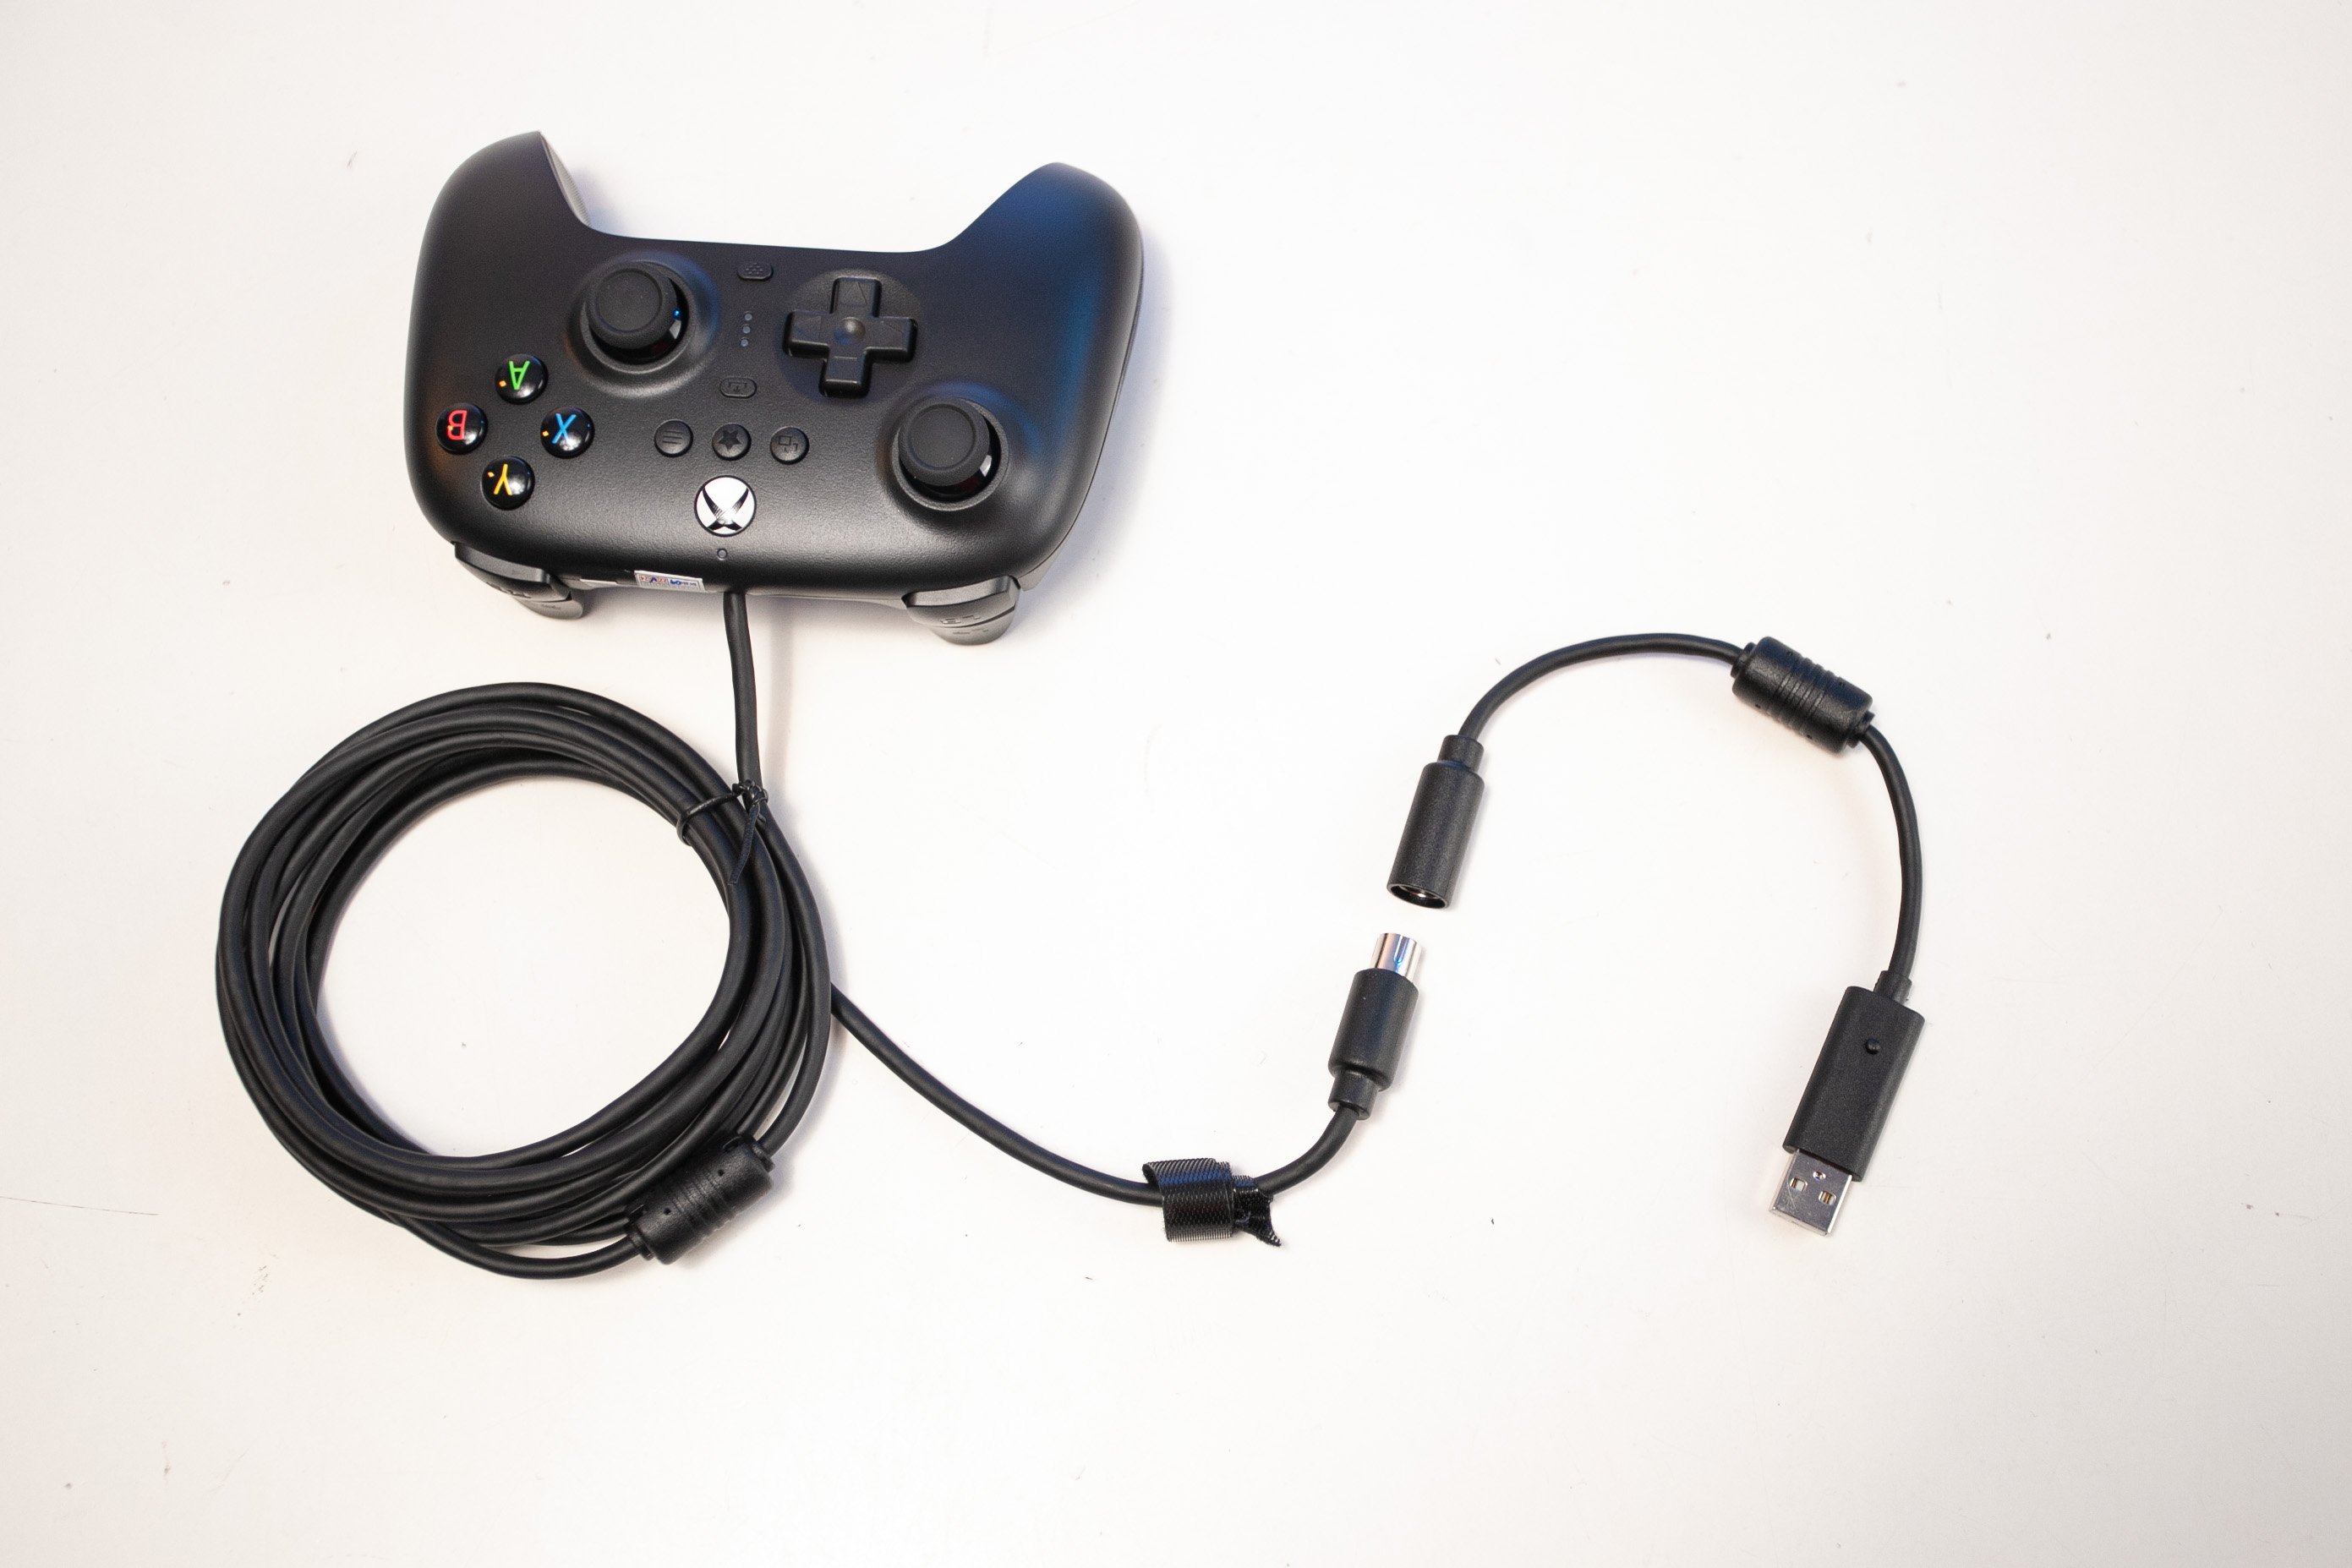 Tay cầm chơi game 8BitDo Ultimate Wired Controller cho Xbox/PC màu đen